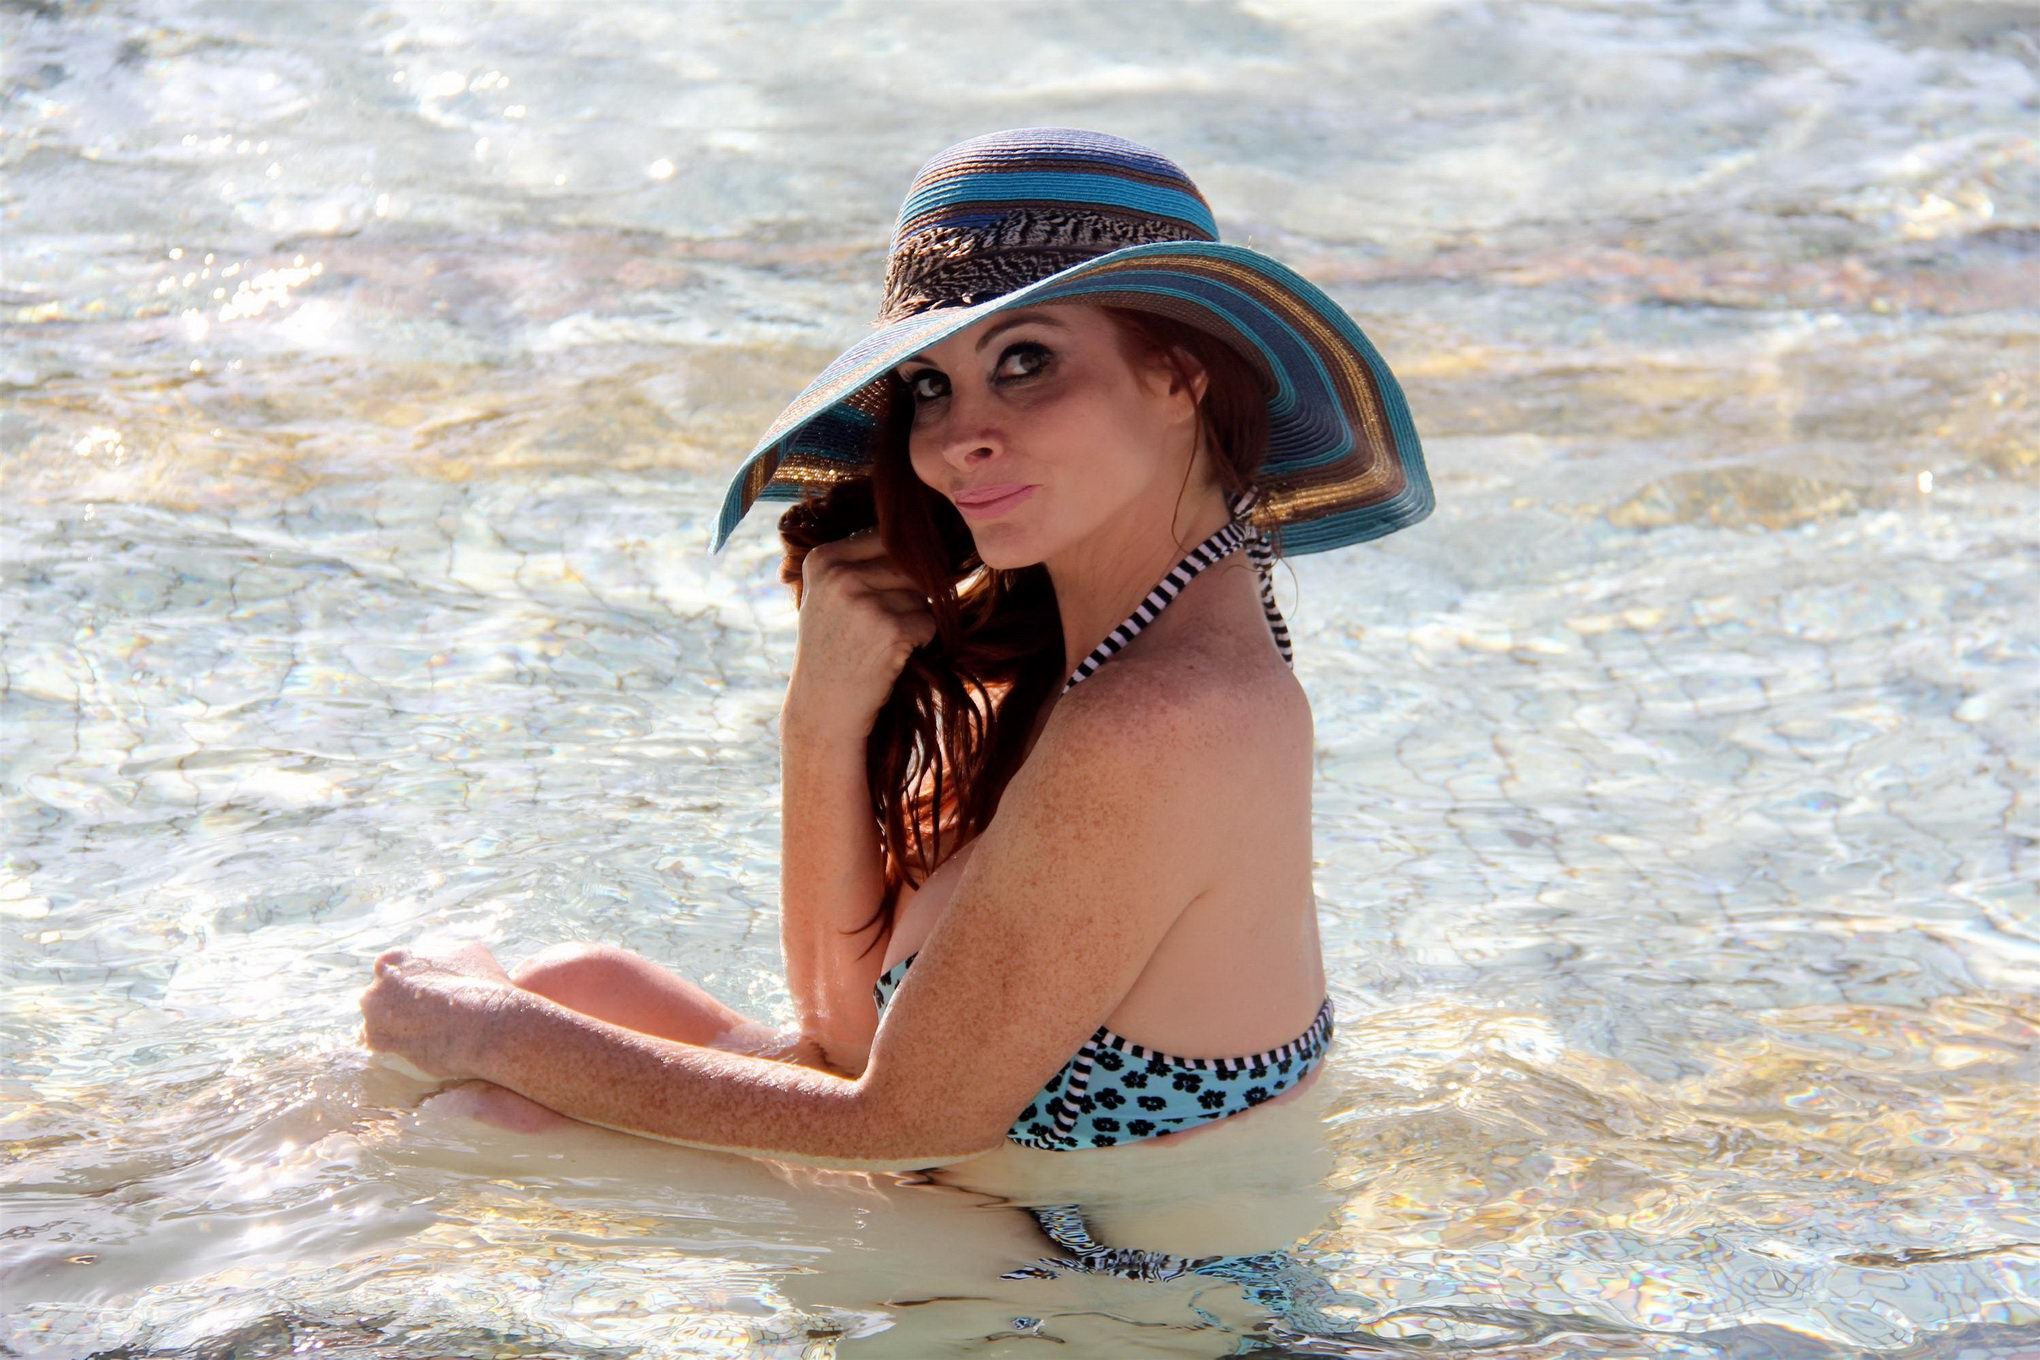 Phoebe prezzo bikini nip slip alla piscina dell'hotel venetian a las vegas
 #75267202